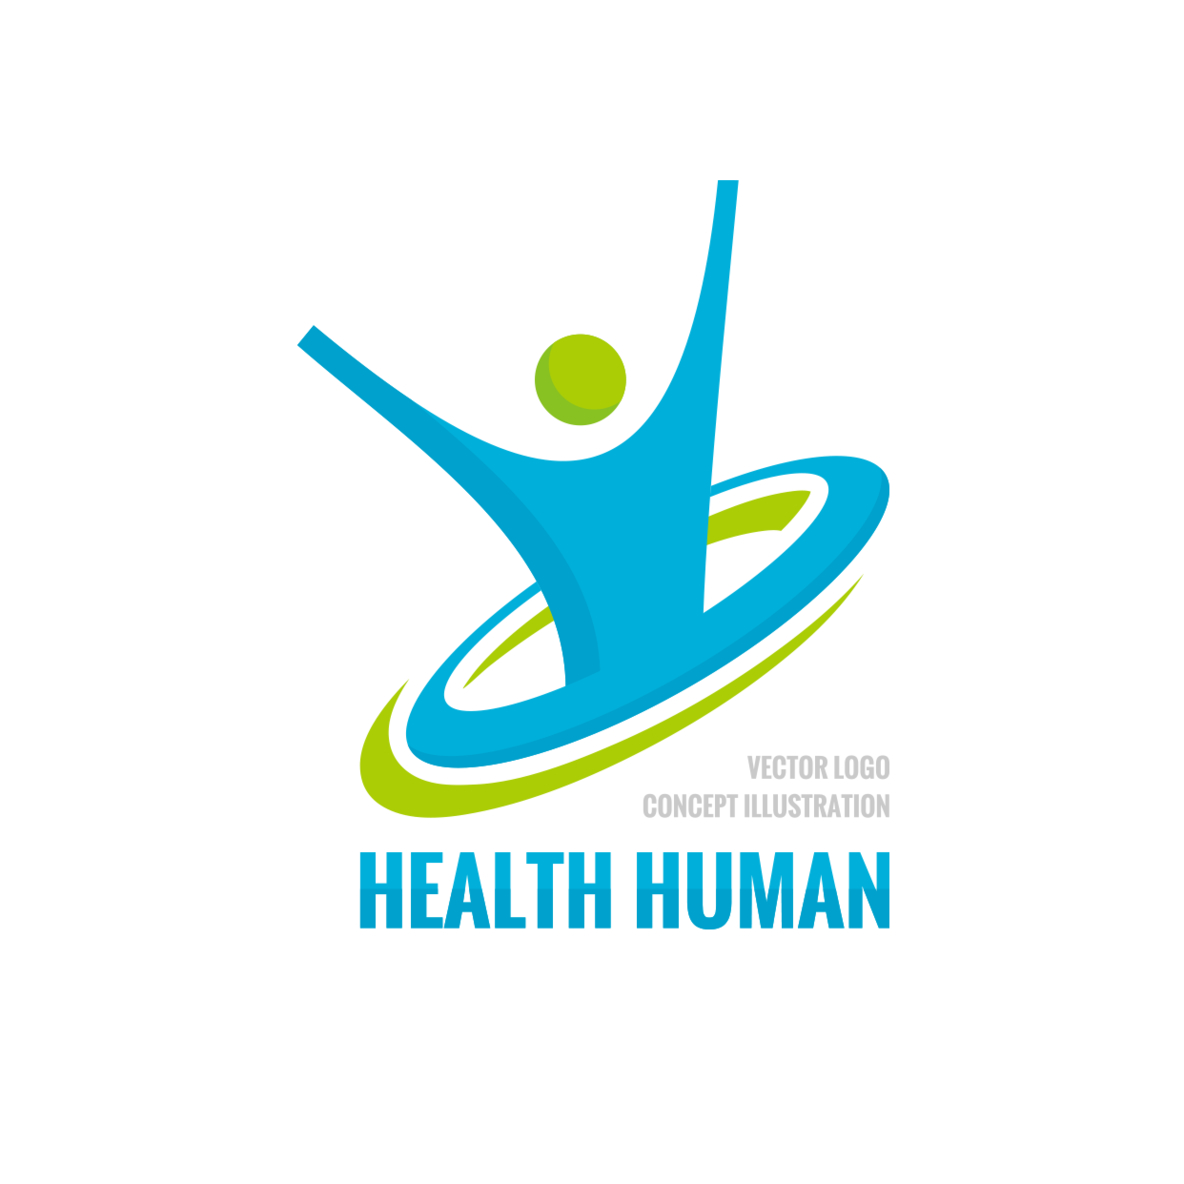 logoHealth human - vector logo concept illustration